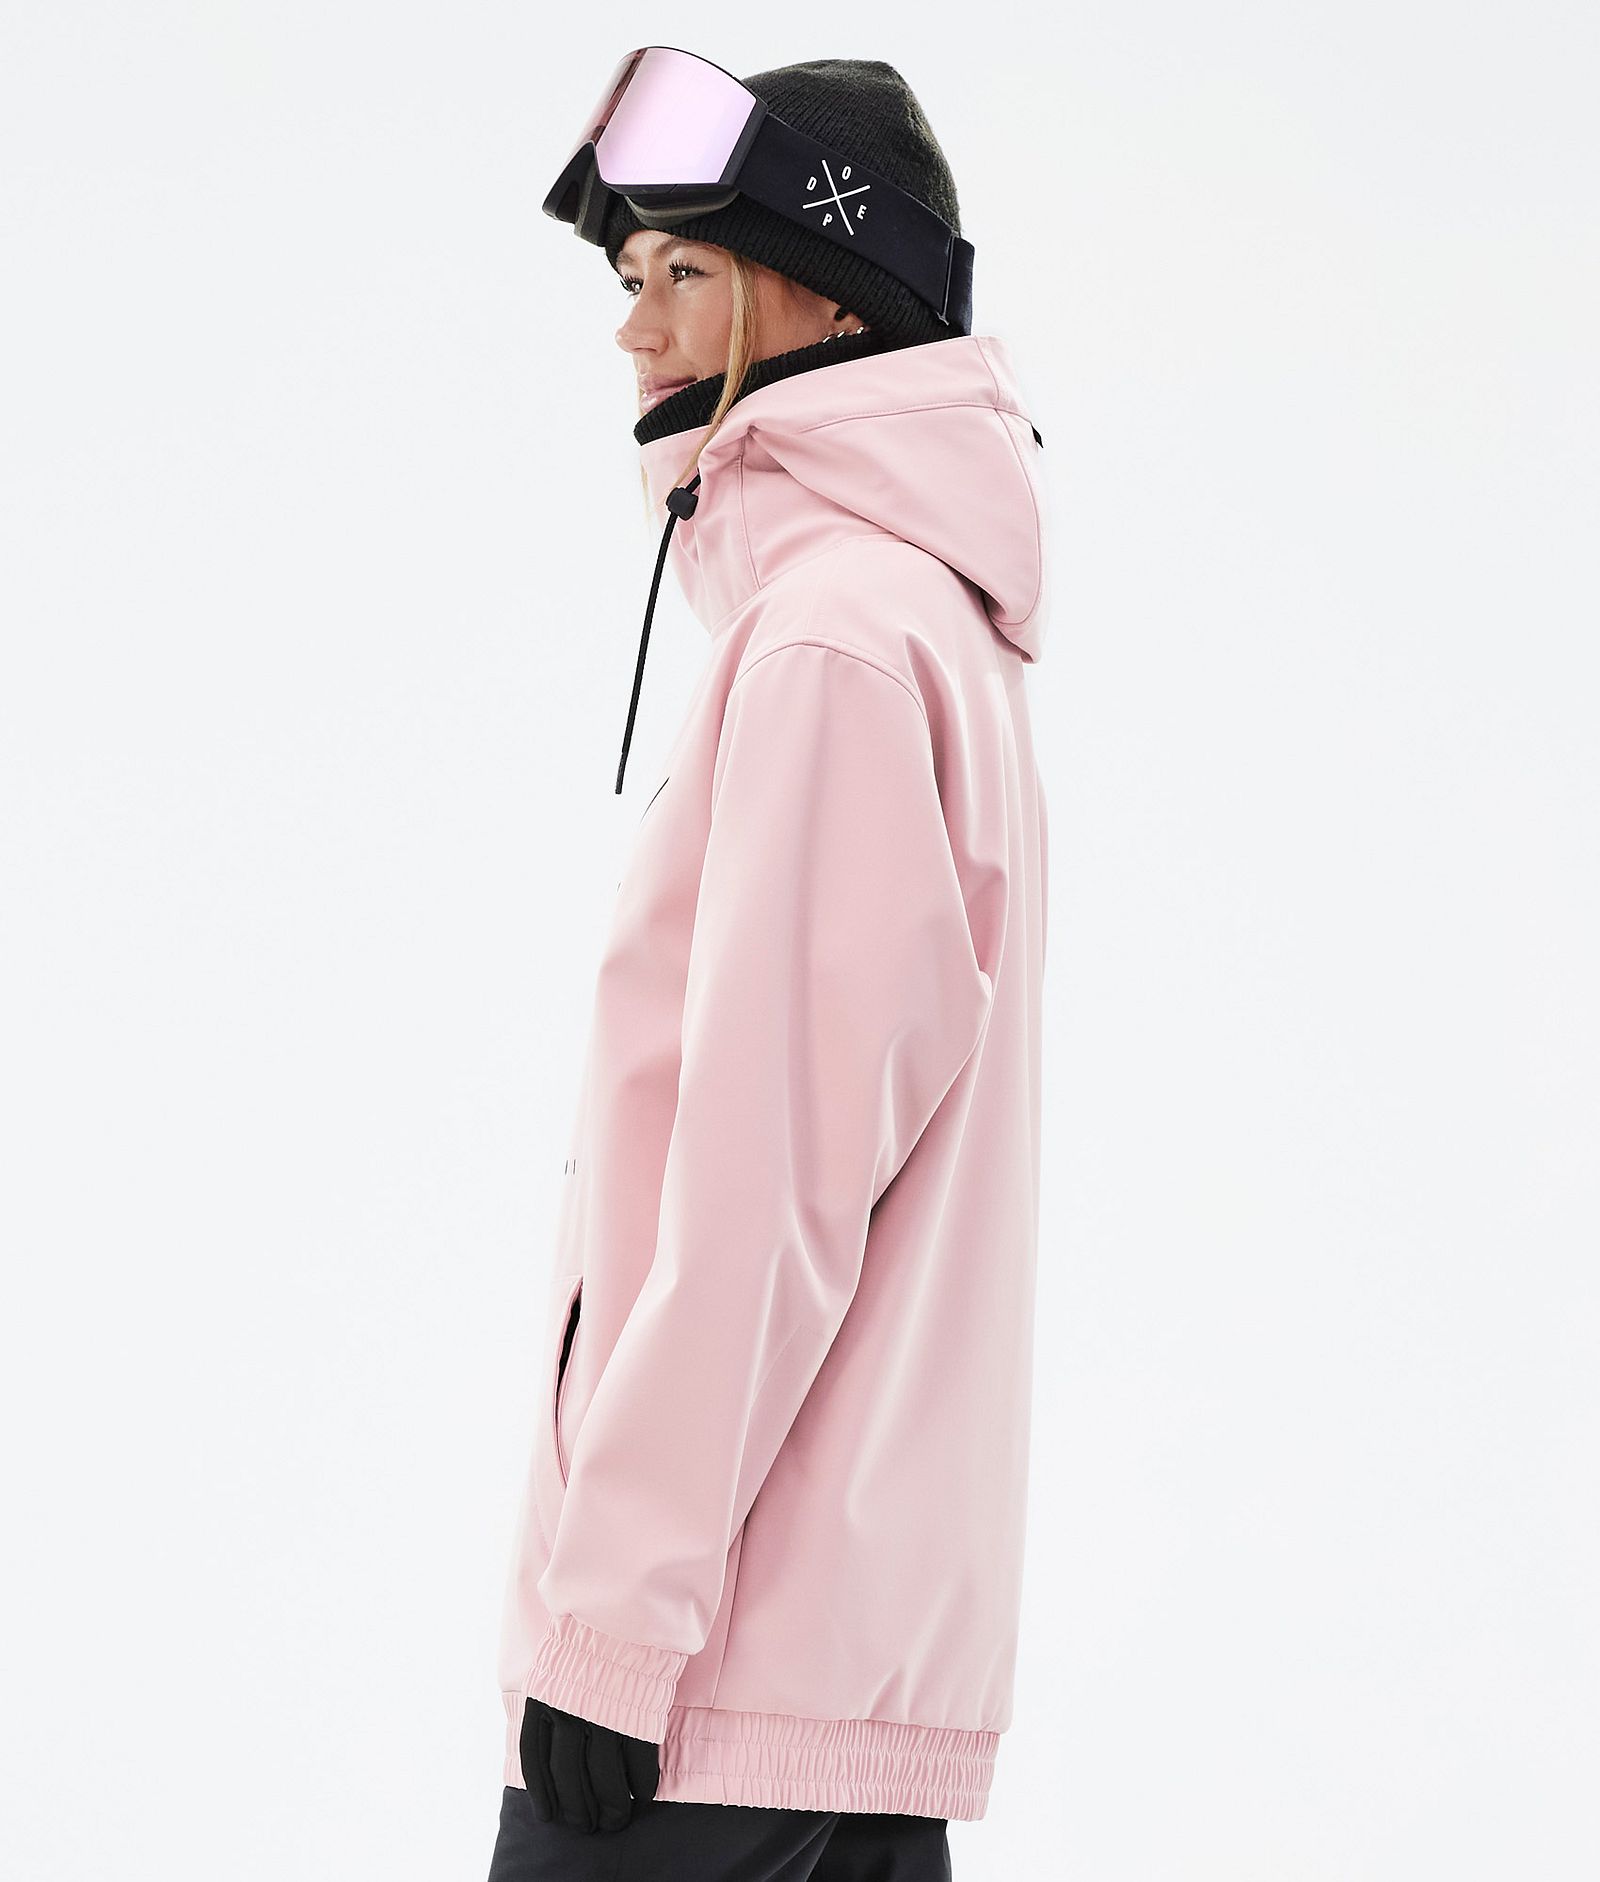 Yeti W スキージャケット レディース 2X-Up Soft Pink